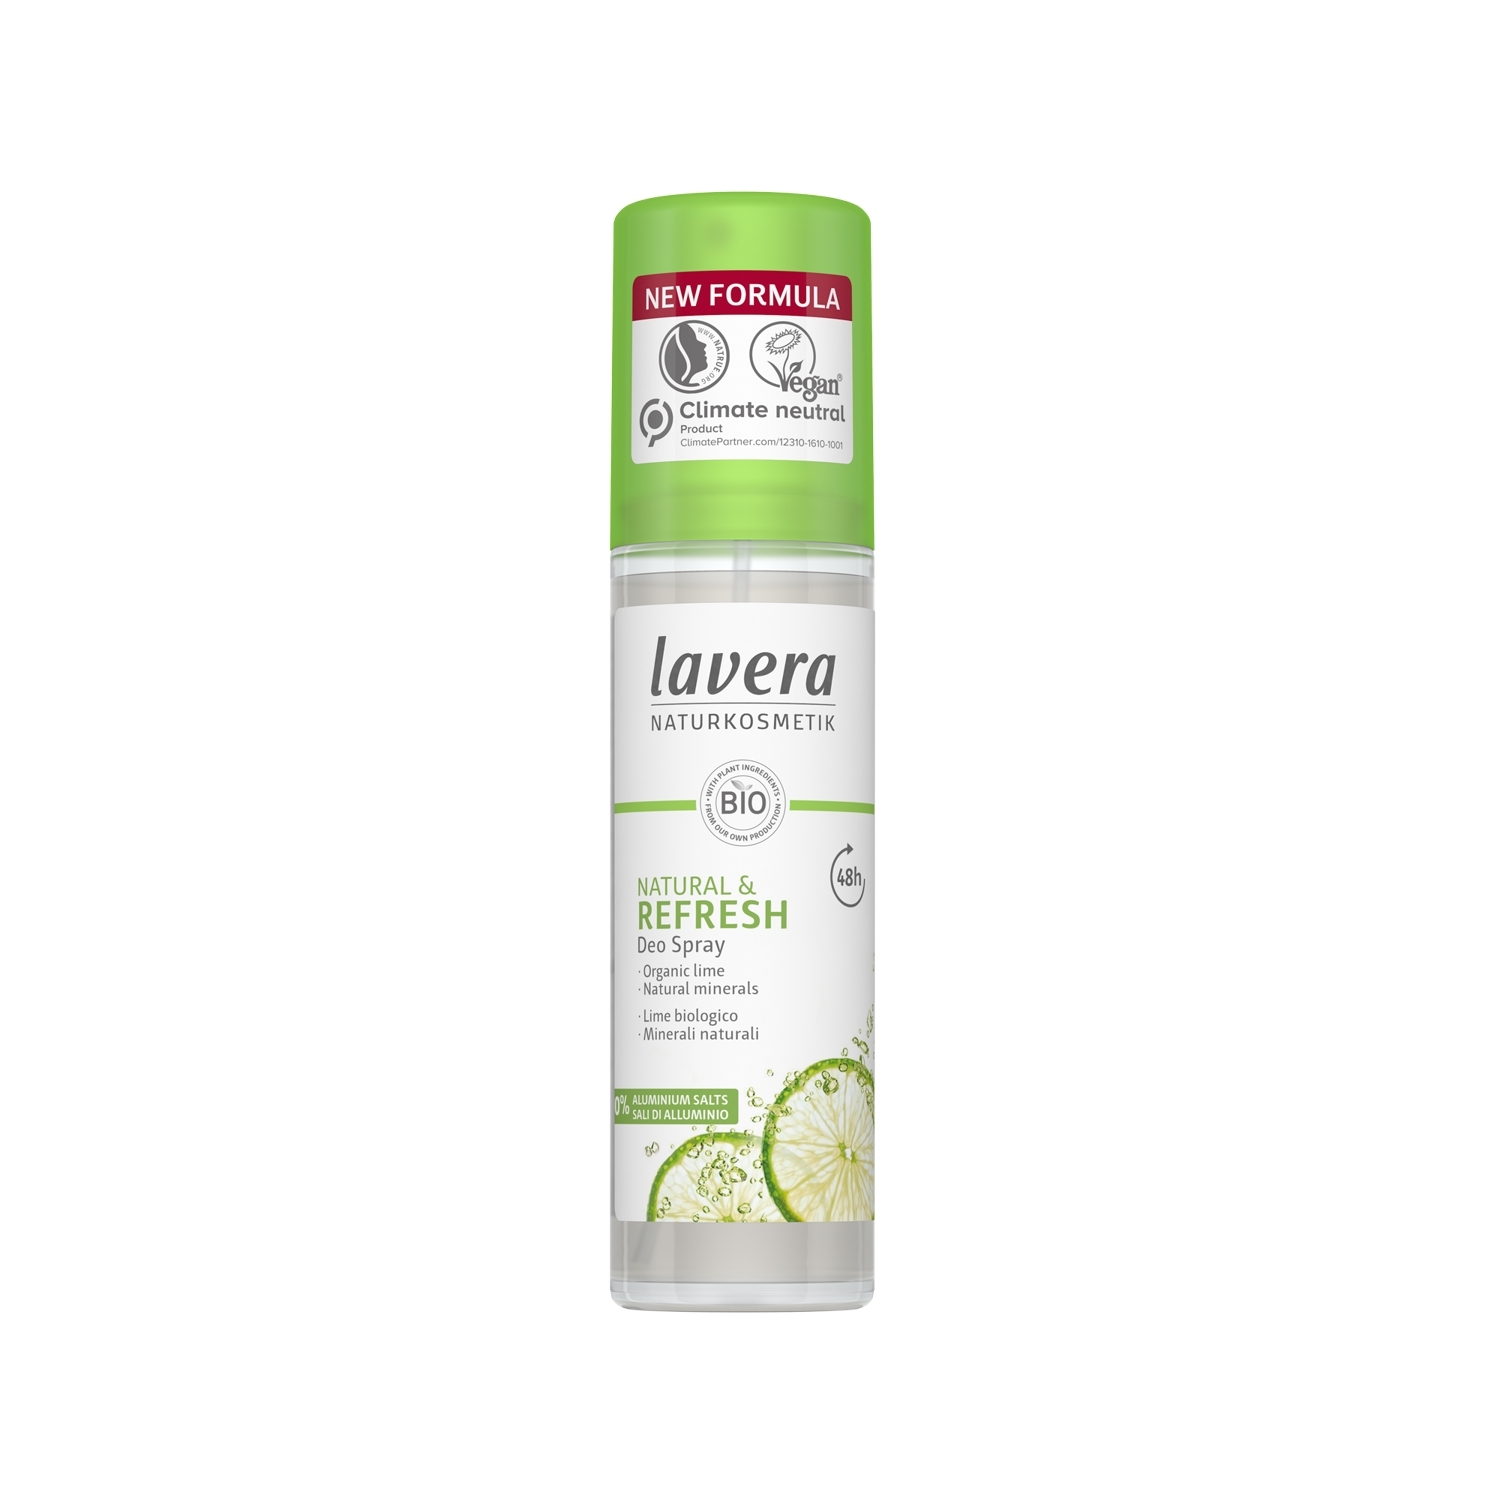 Lavera Natural & Refresh Deodorant Sprey 75ml